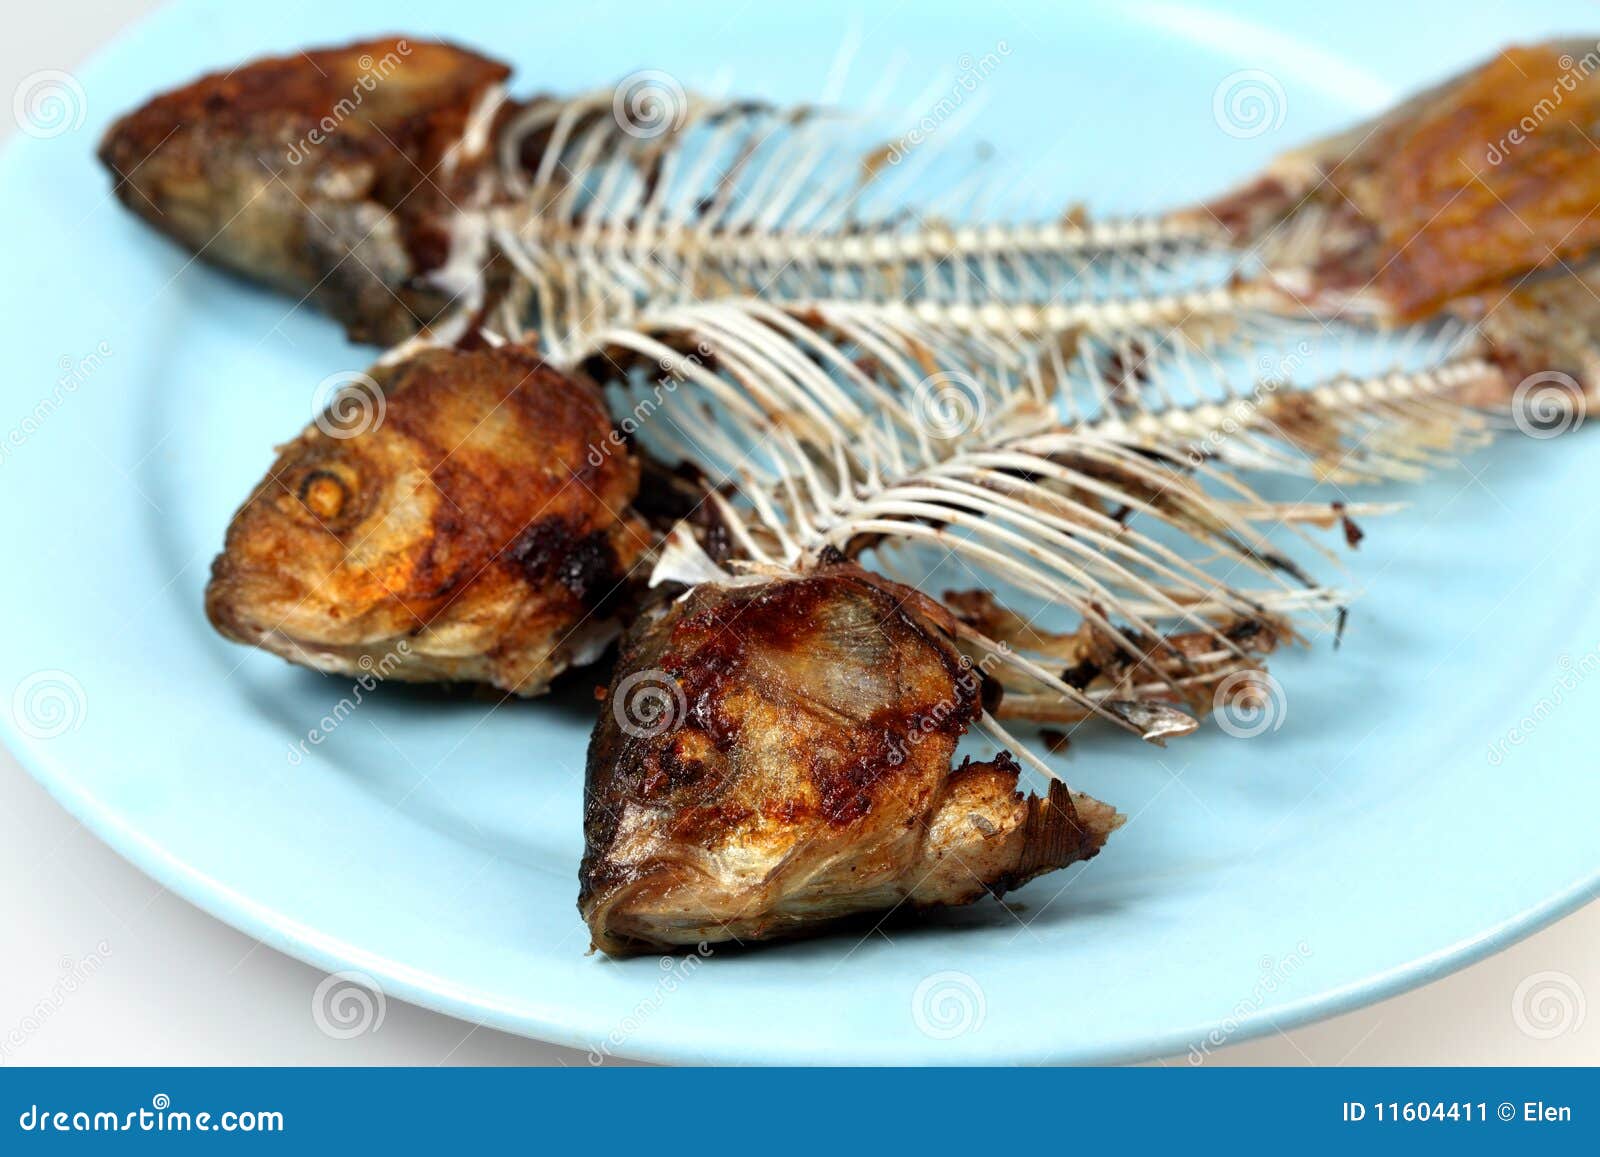 Fish bones stock image. Image of prepared, dish, snack - 11604411